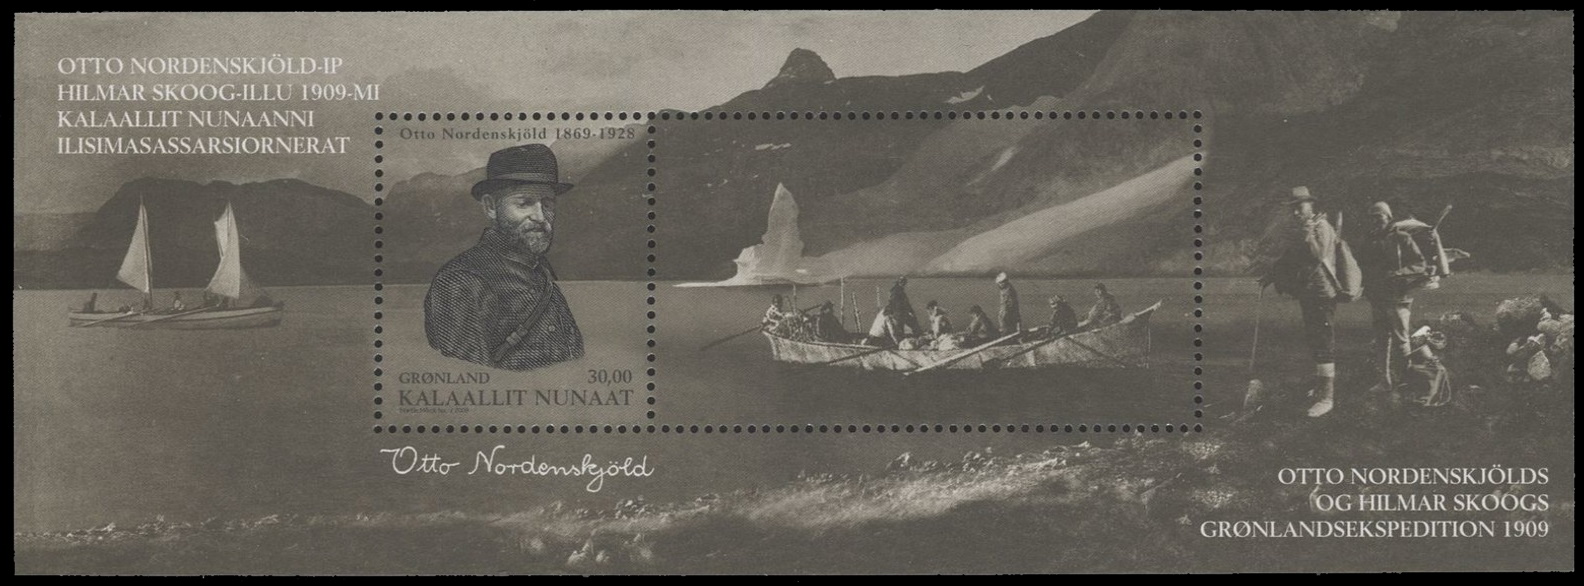 Otto Nordenskjöld on stamp of Greenland 2009